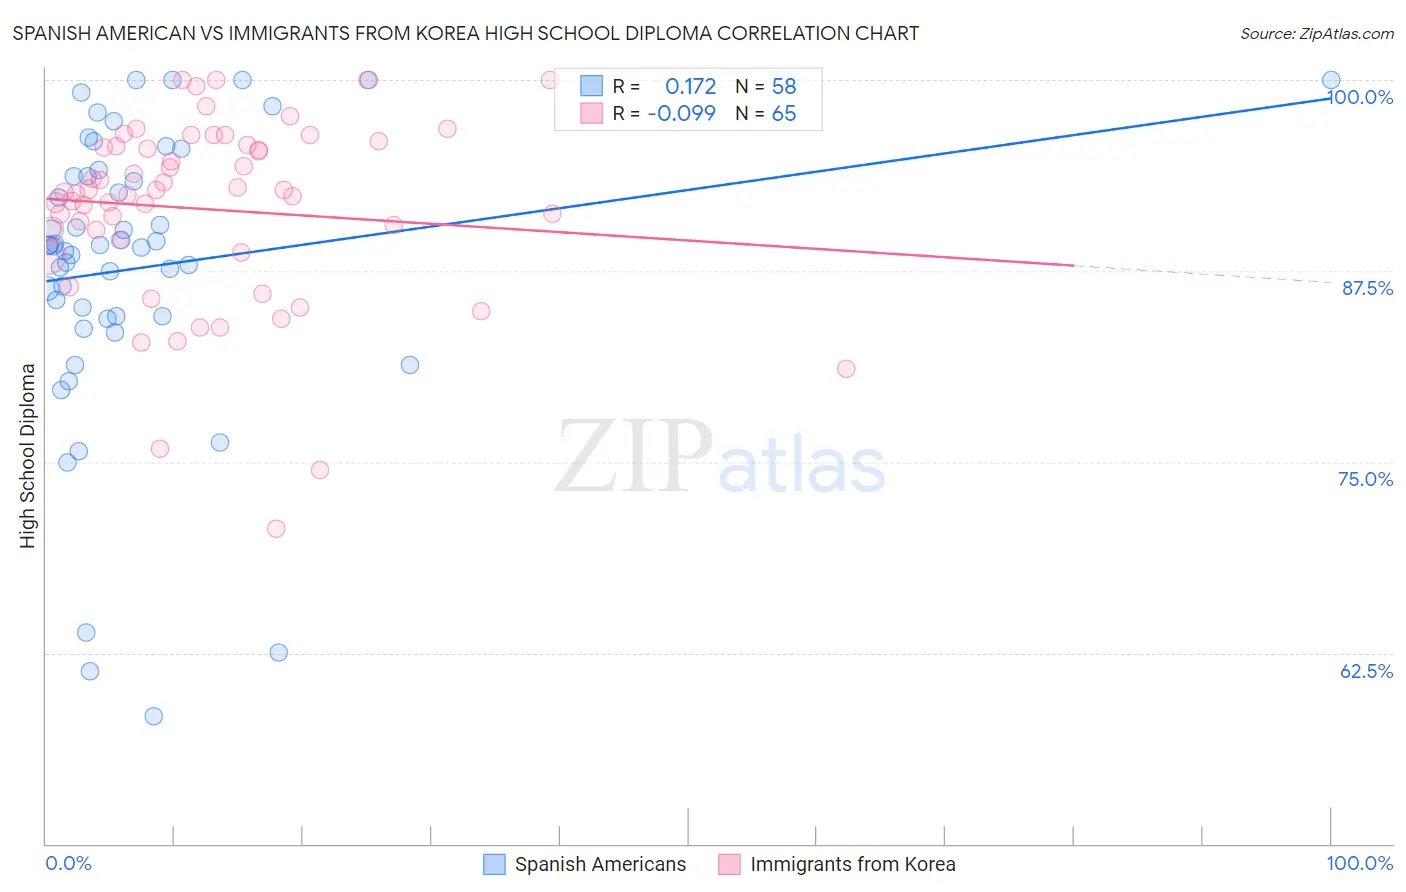 Spanish American vs Immigrants from Korea High School Diploma